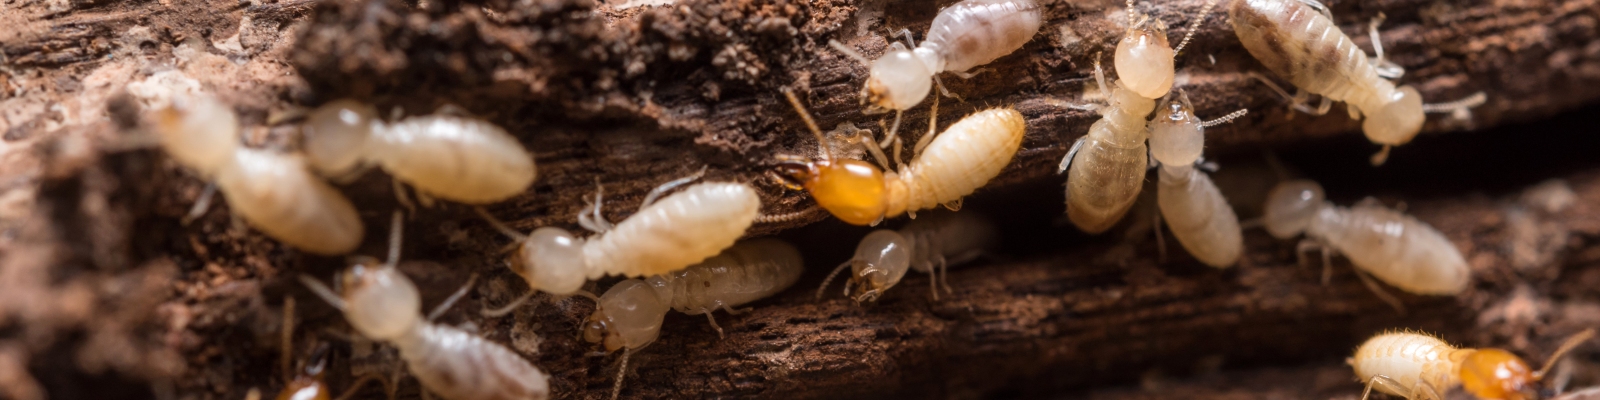 Archers Termite & Pest Control - Archer 4 Termites